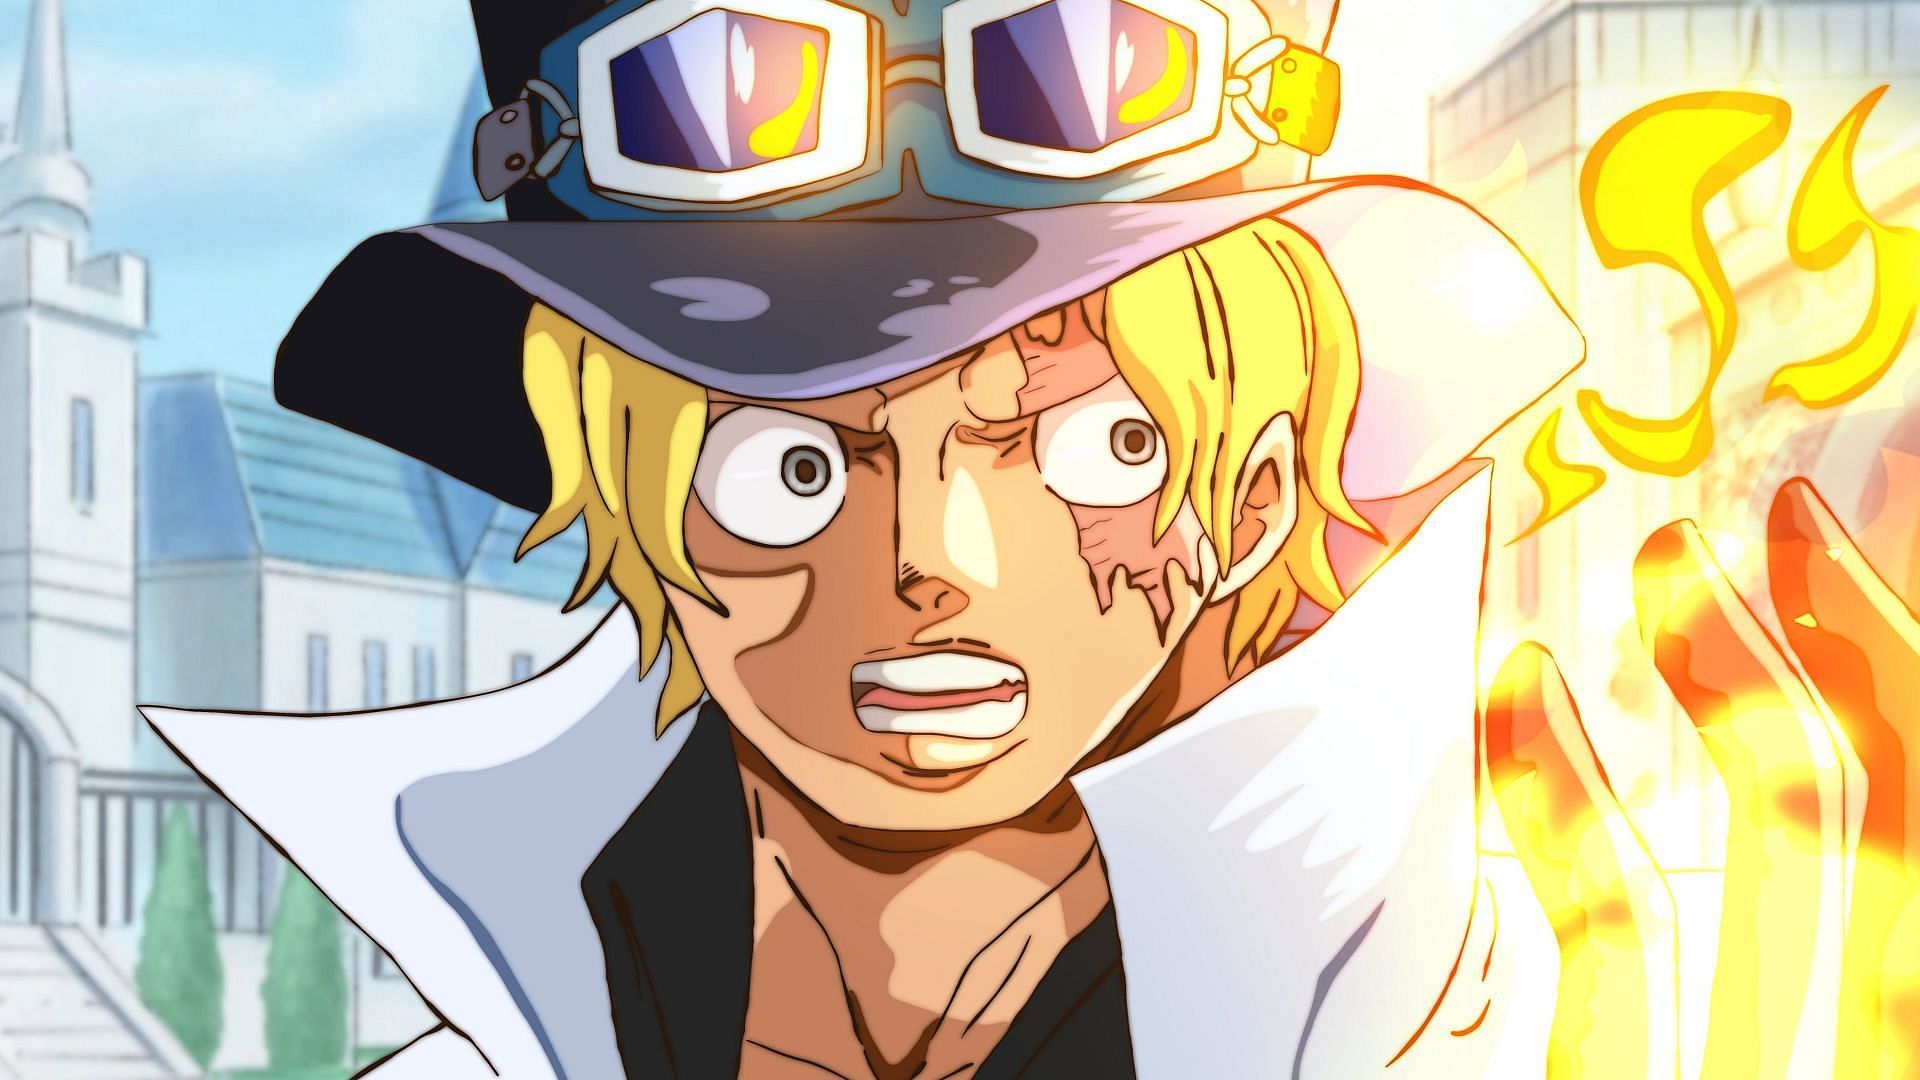 Sabo (Image via Toei Animation, One Piece)